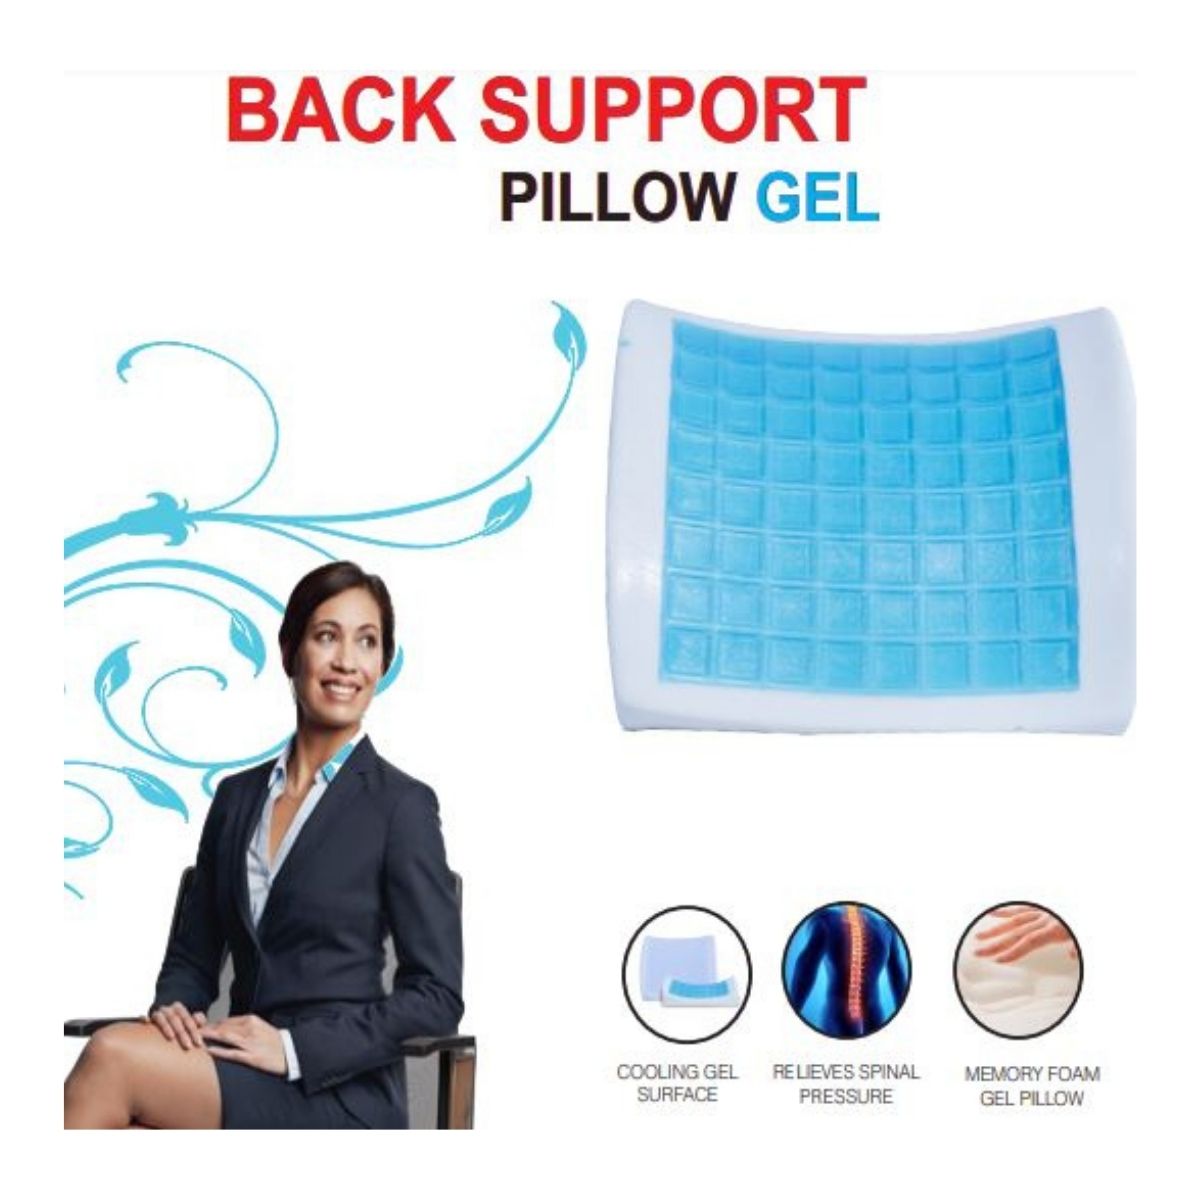 Back Support Pillow Gel